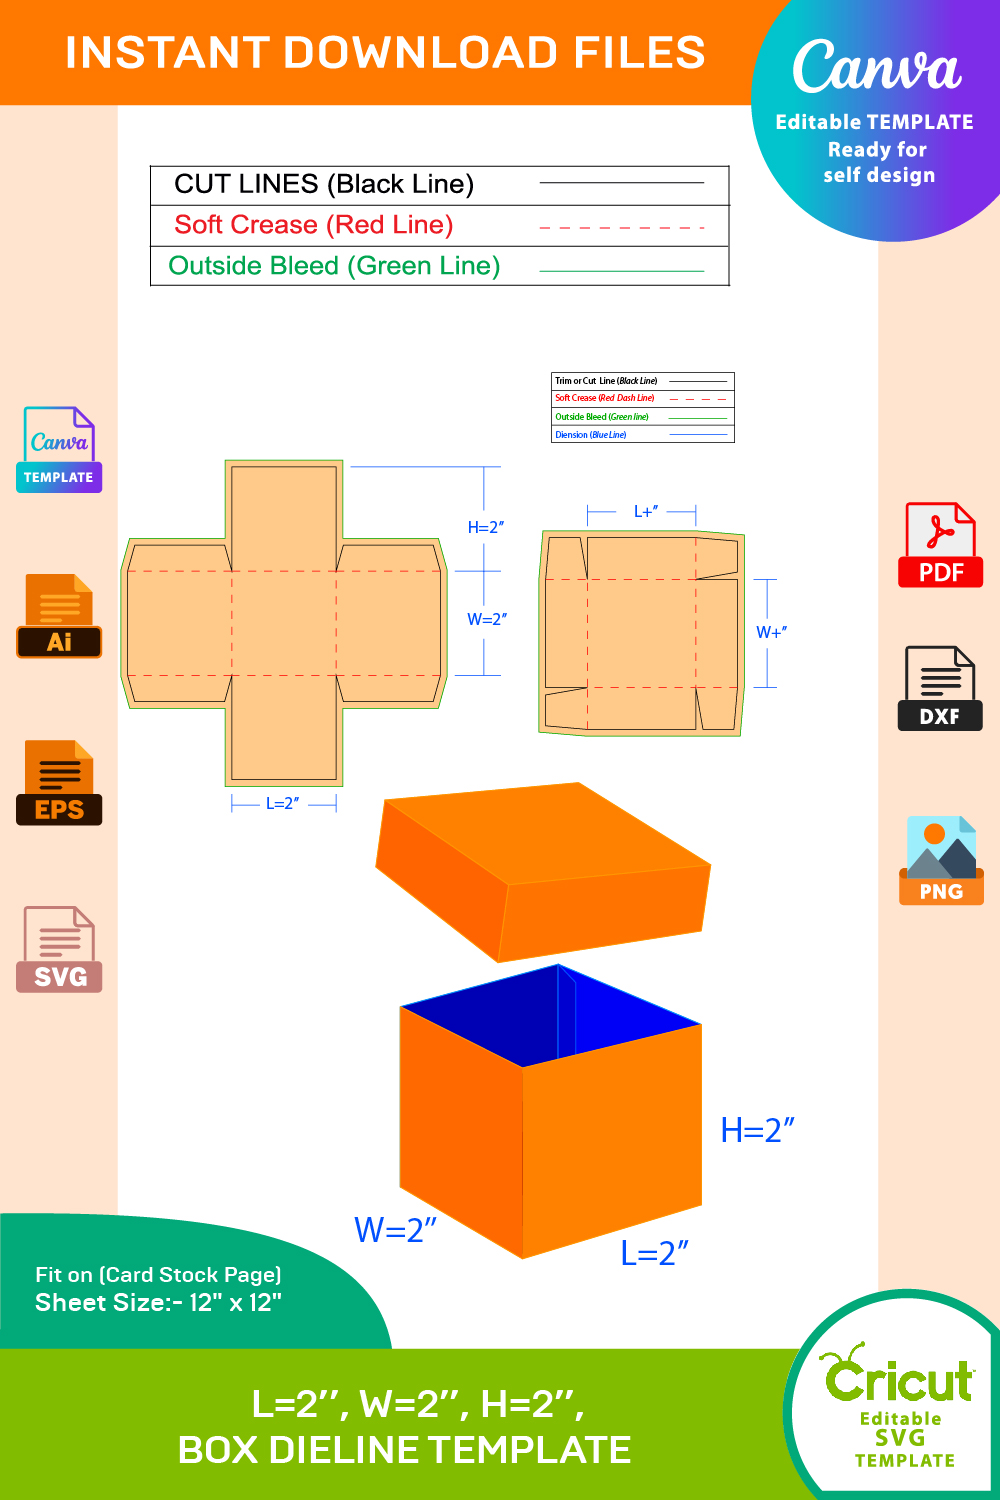 Explasion Box, Storage Box Dieline Template SVG, Ai, EPS, PDF, DXF, JPG, PNG File pinterest preview image.